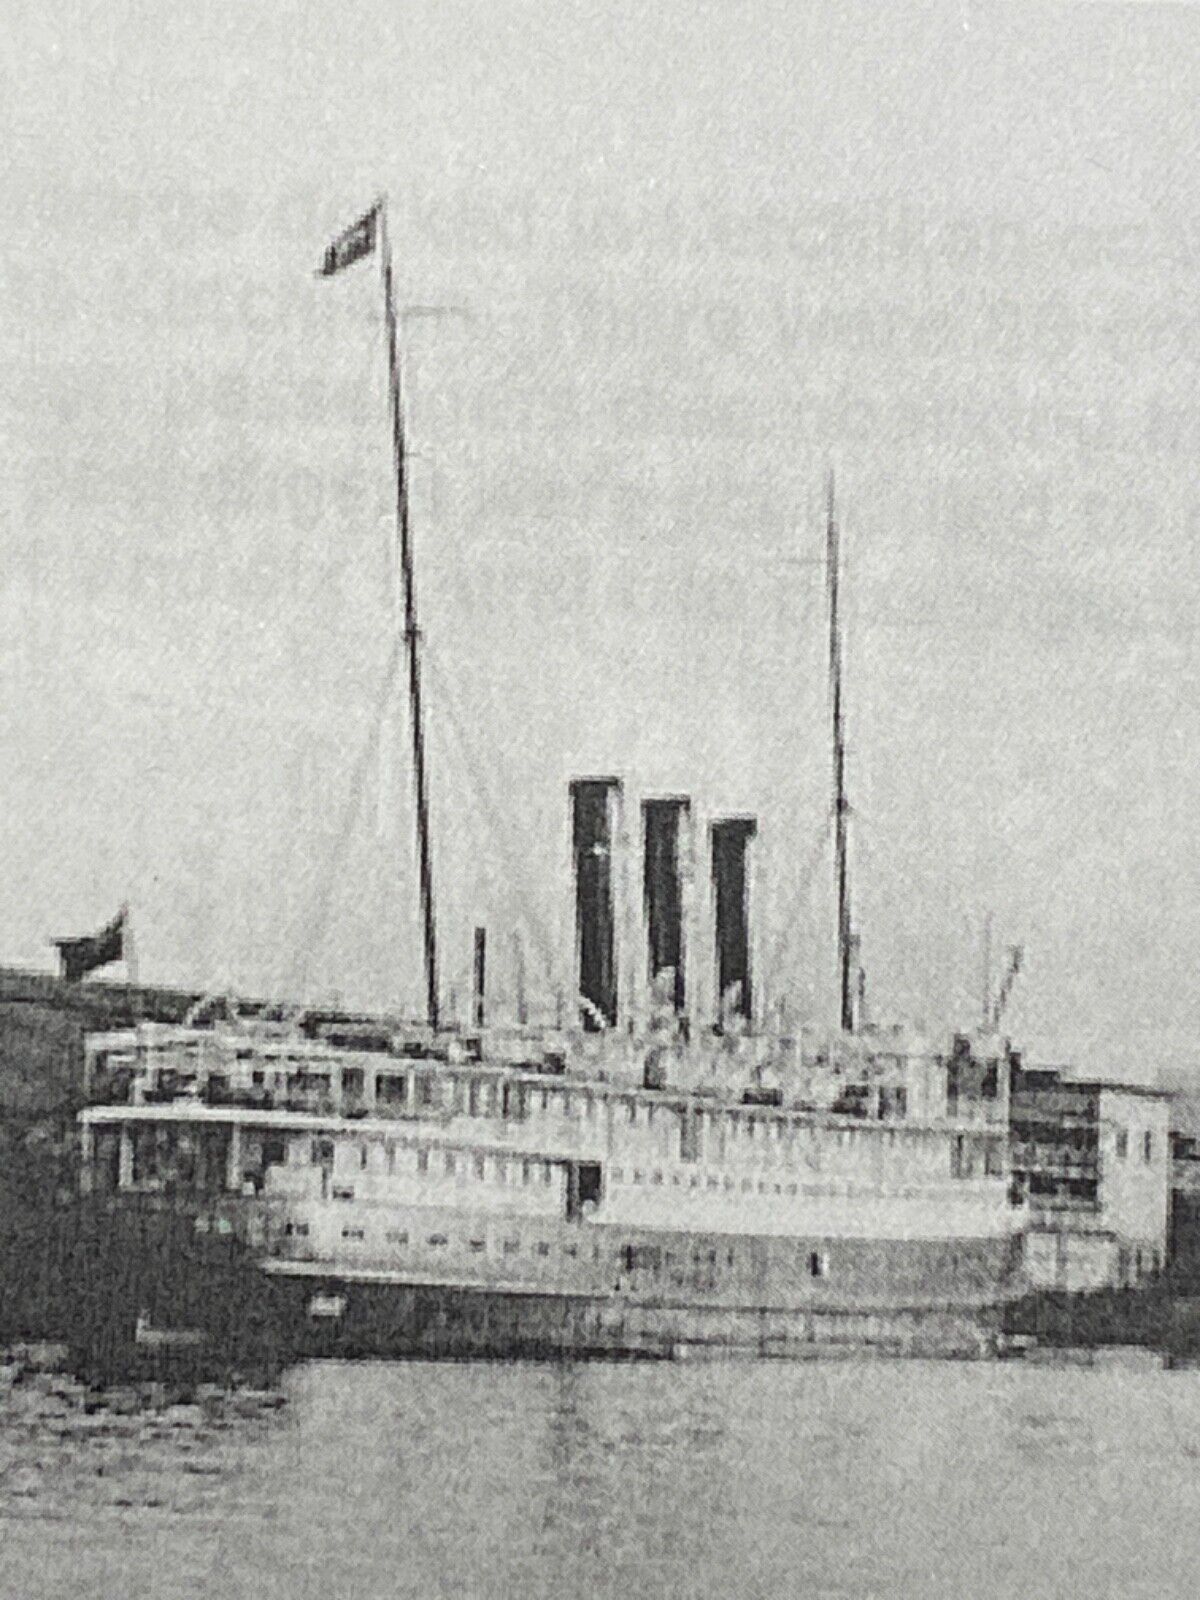 Canadian SS Prince George Steamship Shipwreck Beach Found Bowl Piece